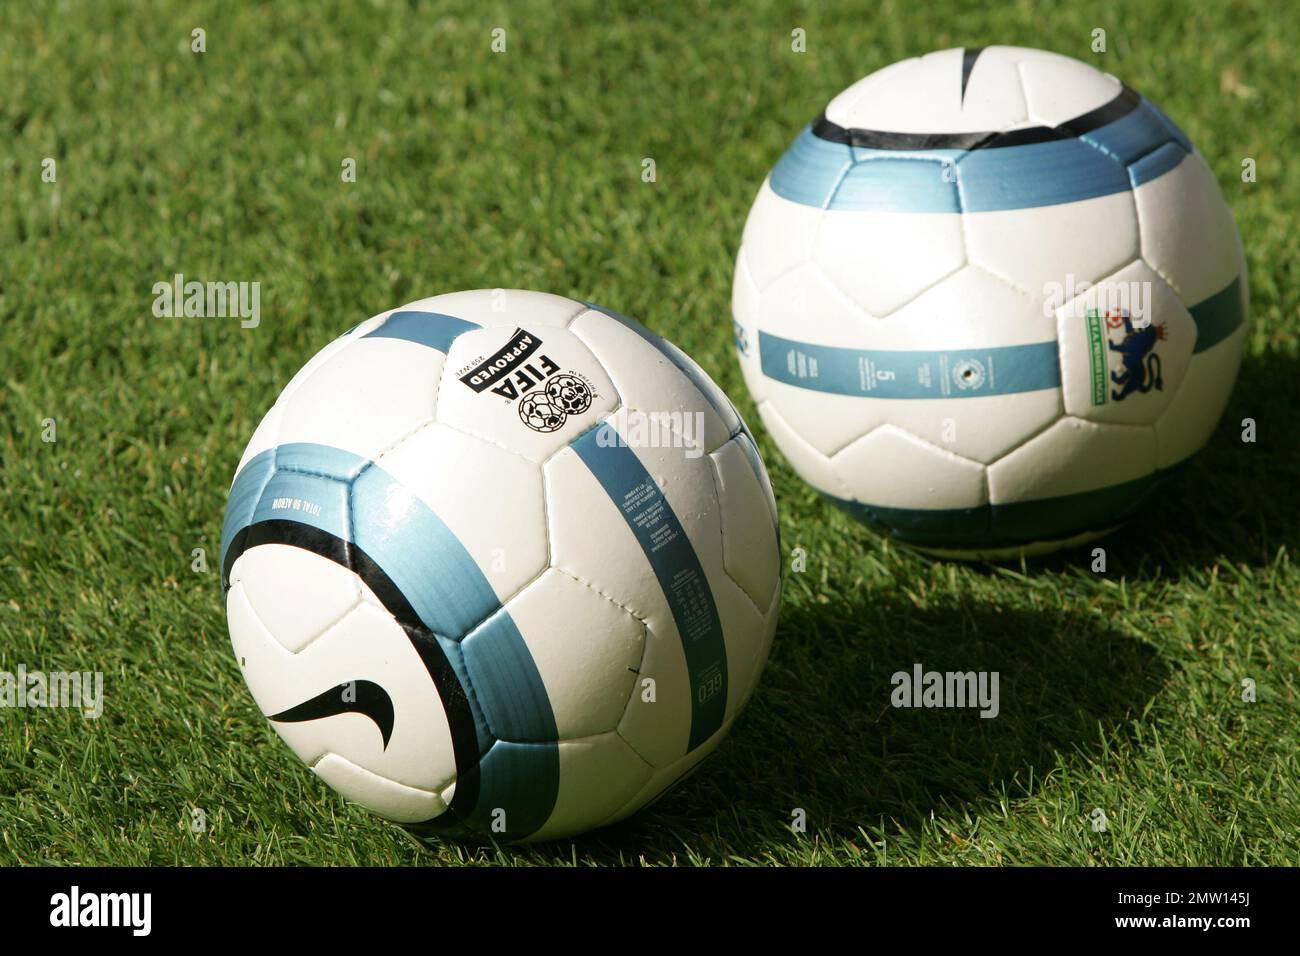 2004 season premier league Fifa Nike ball Stock Photo - Alamy